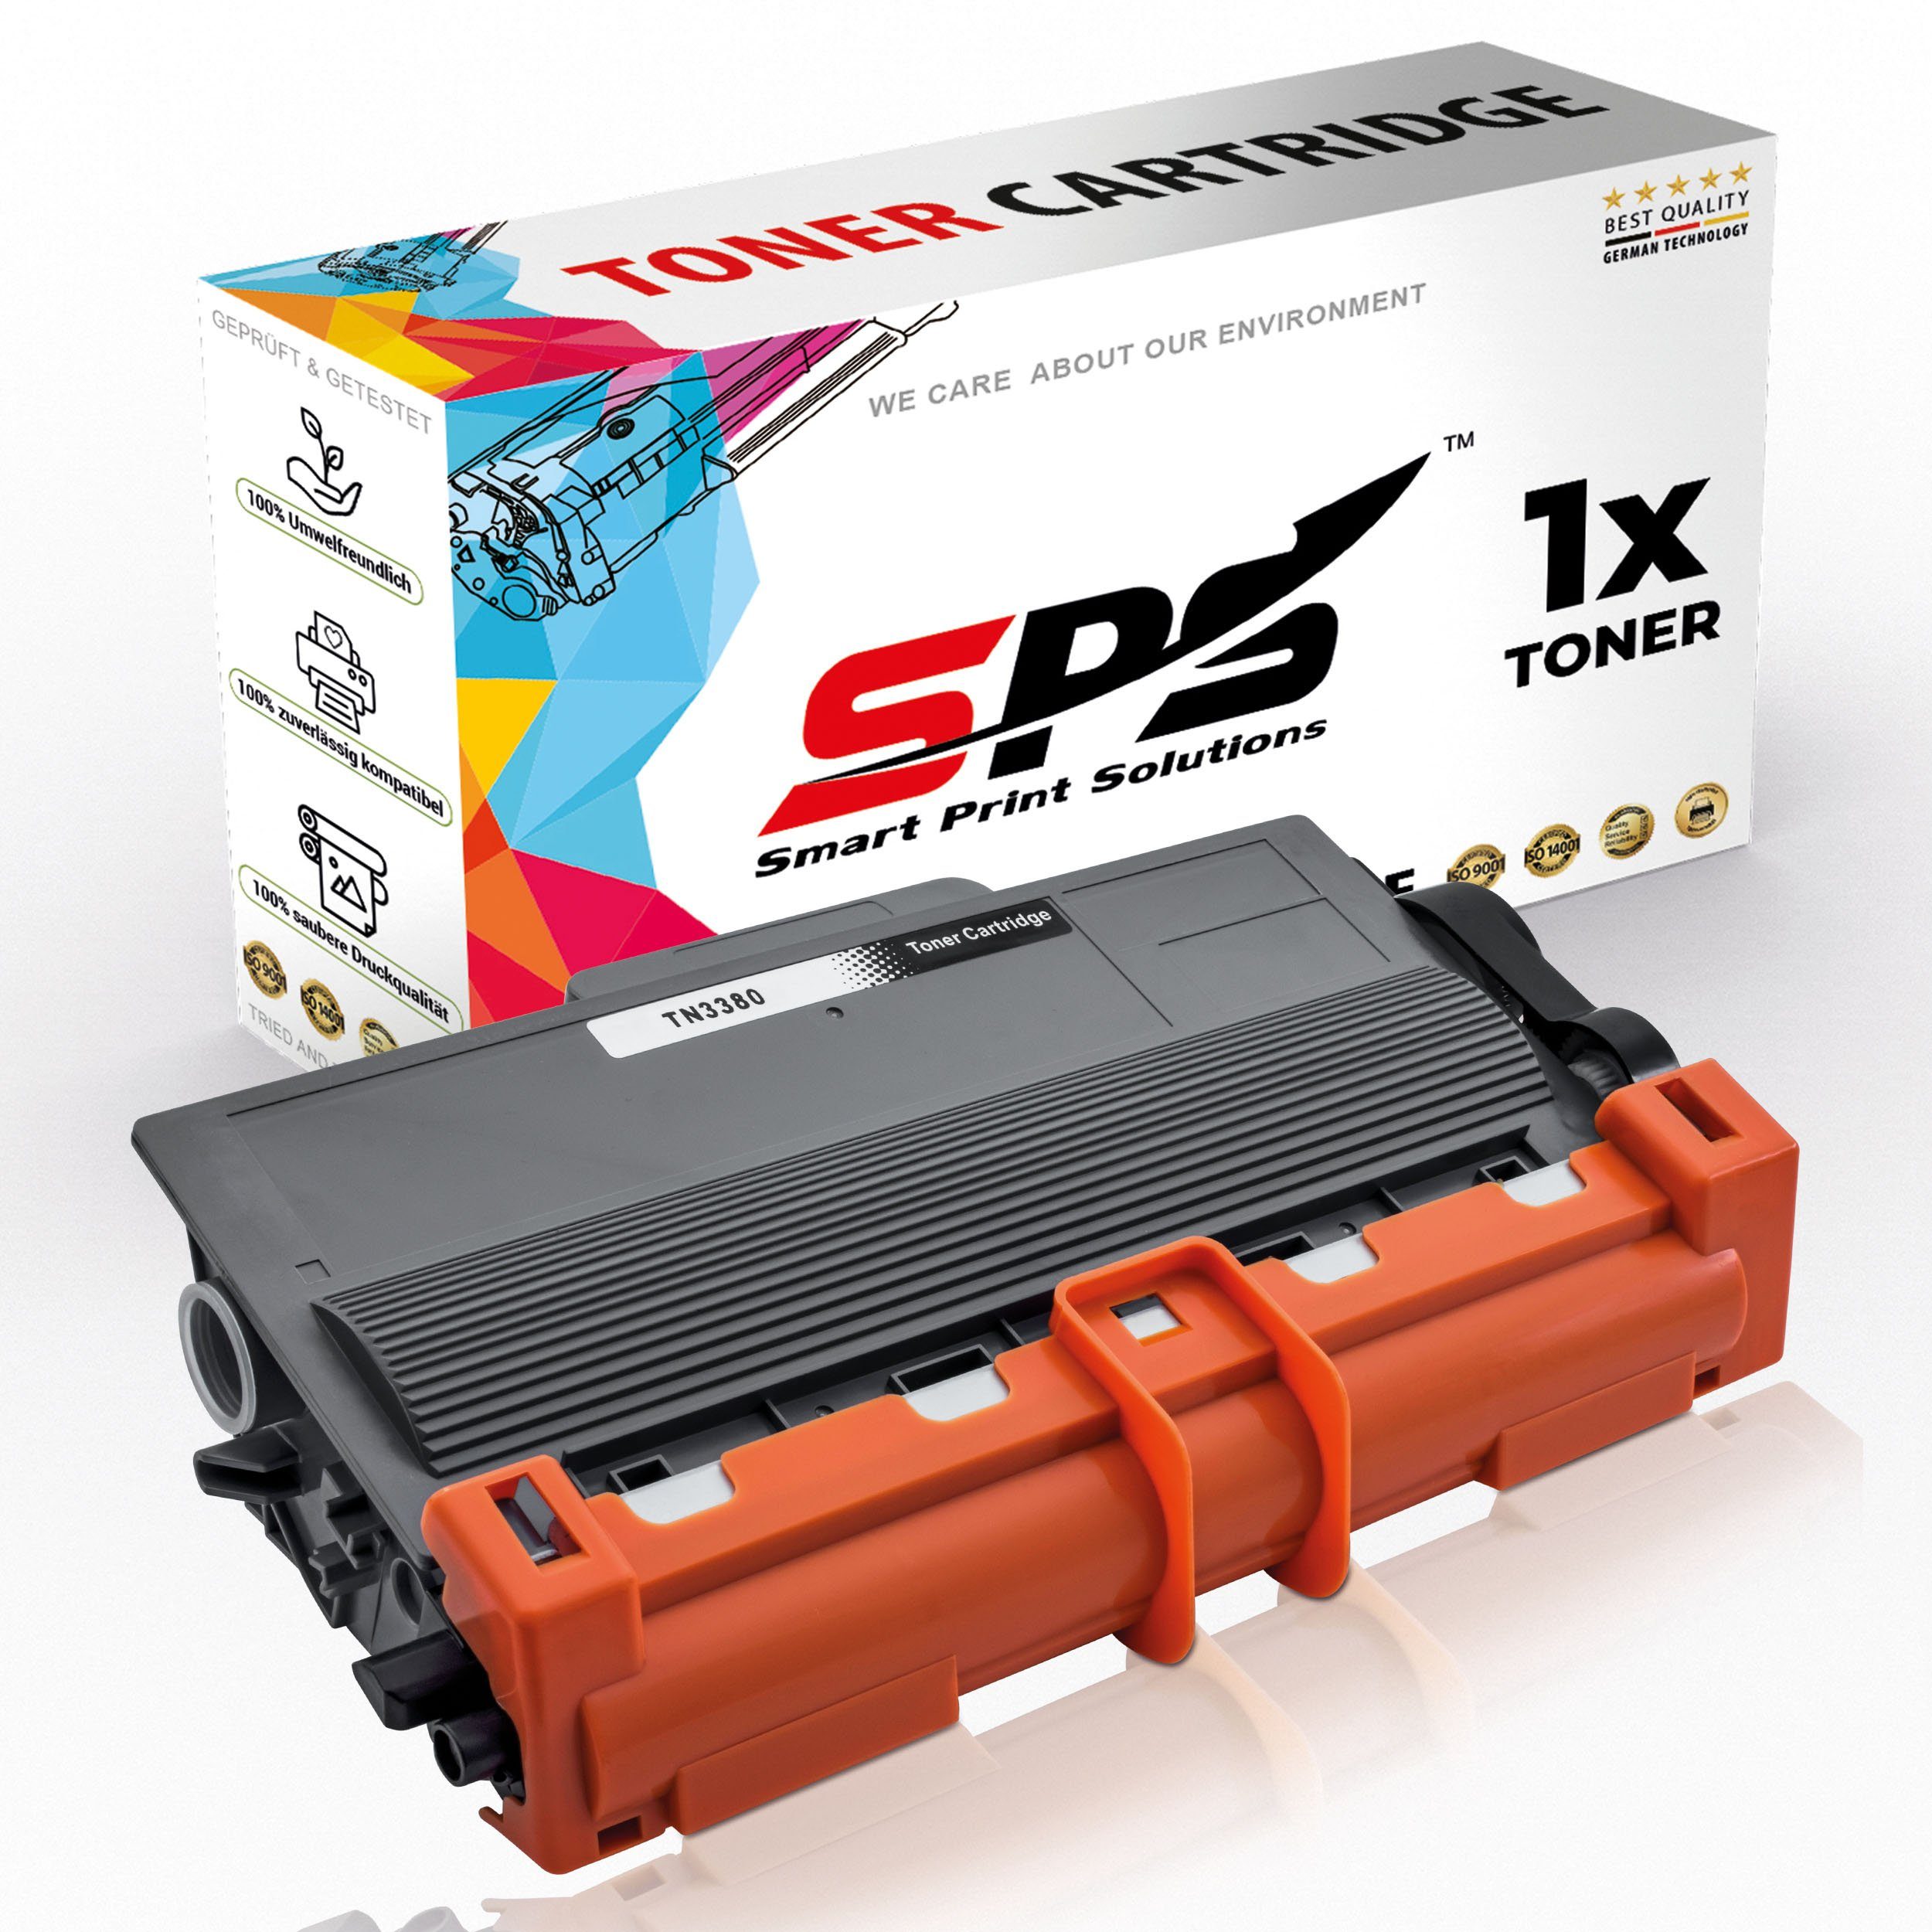 SPS Tonerkartusche Kompatibel für Brother HL-5400 TN-3380, (1er Pack) | Tonerpatronen